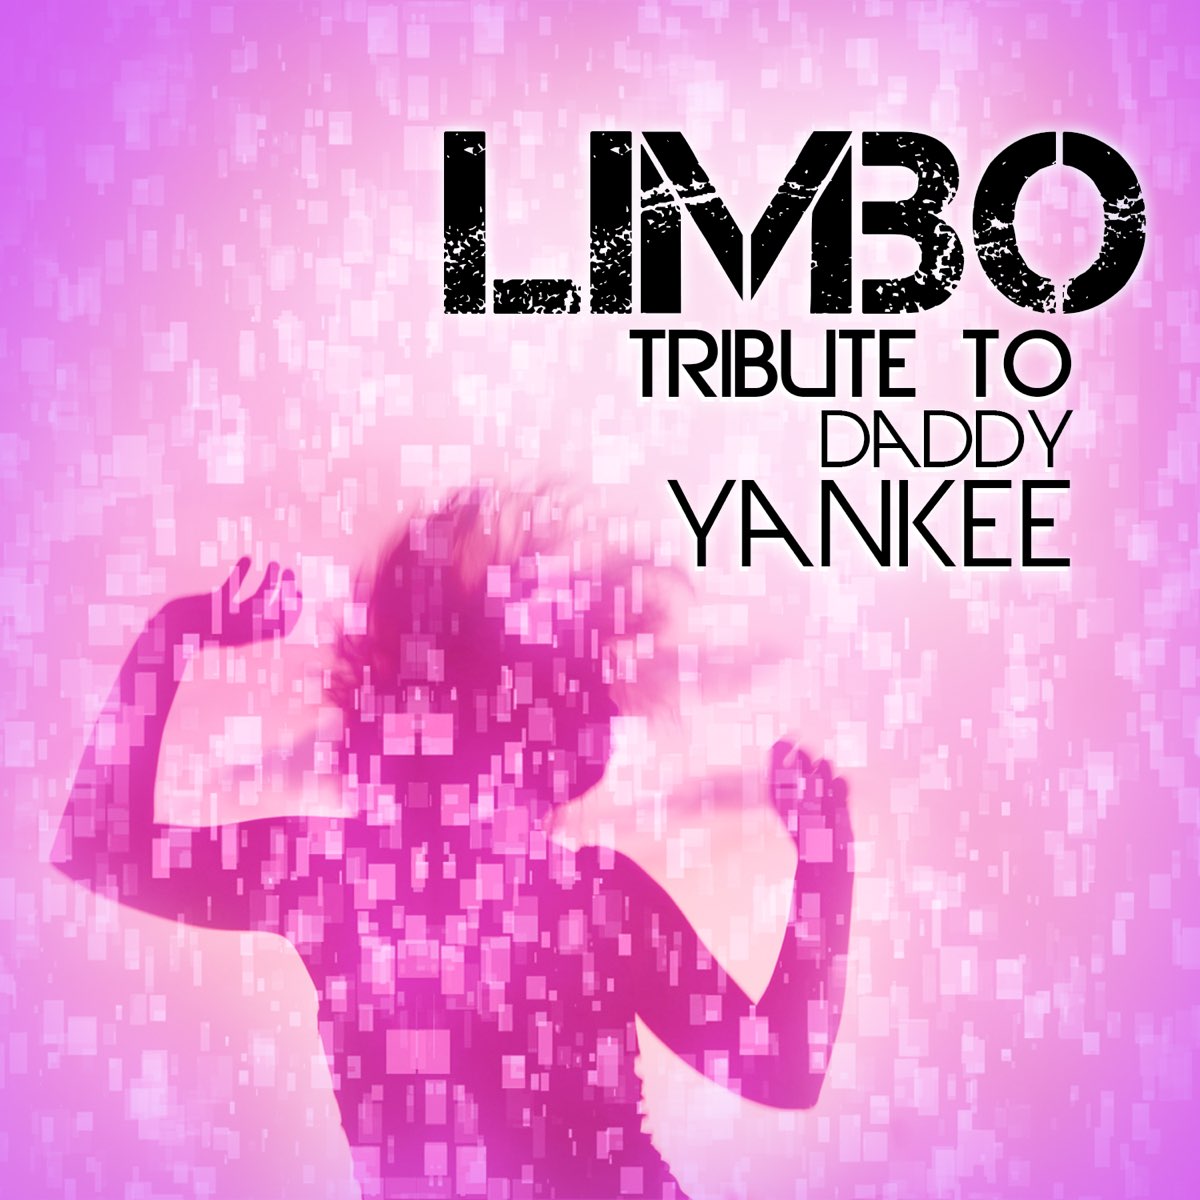 Daddy yankee limbo. Daddy Yankee Limbo фото. Limbo обложка песни Daddy Yankee. Лимбо обложка.